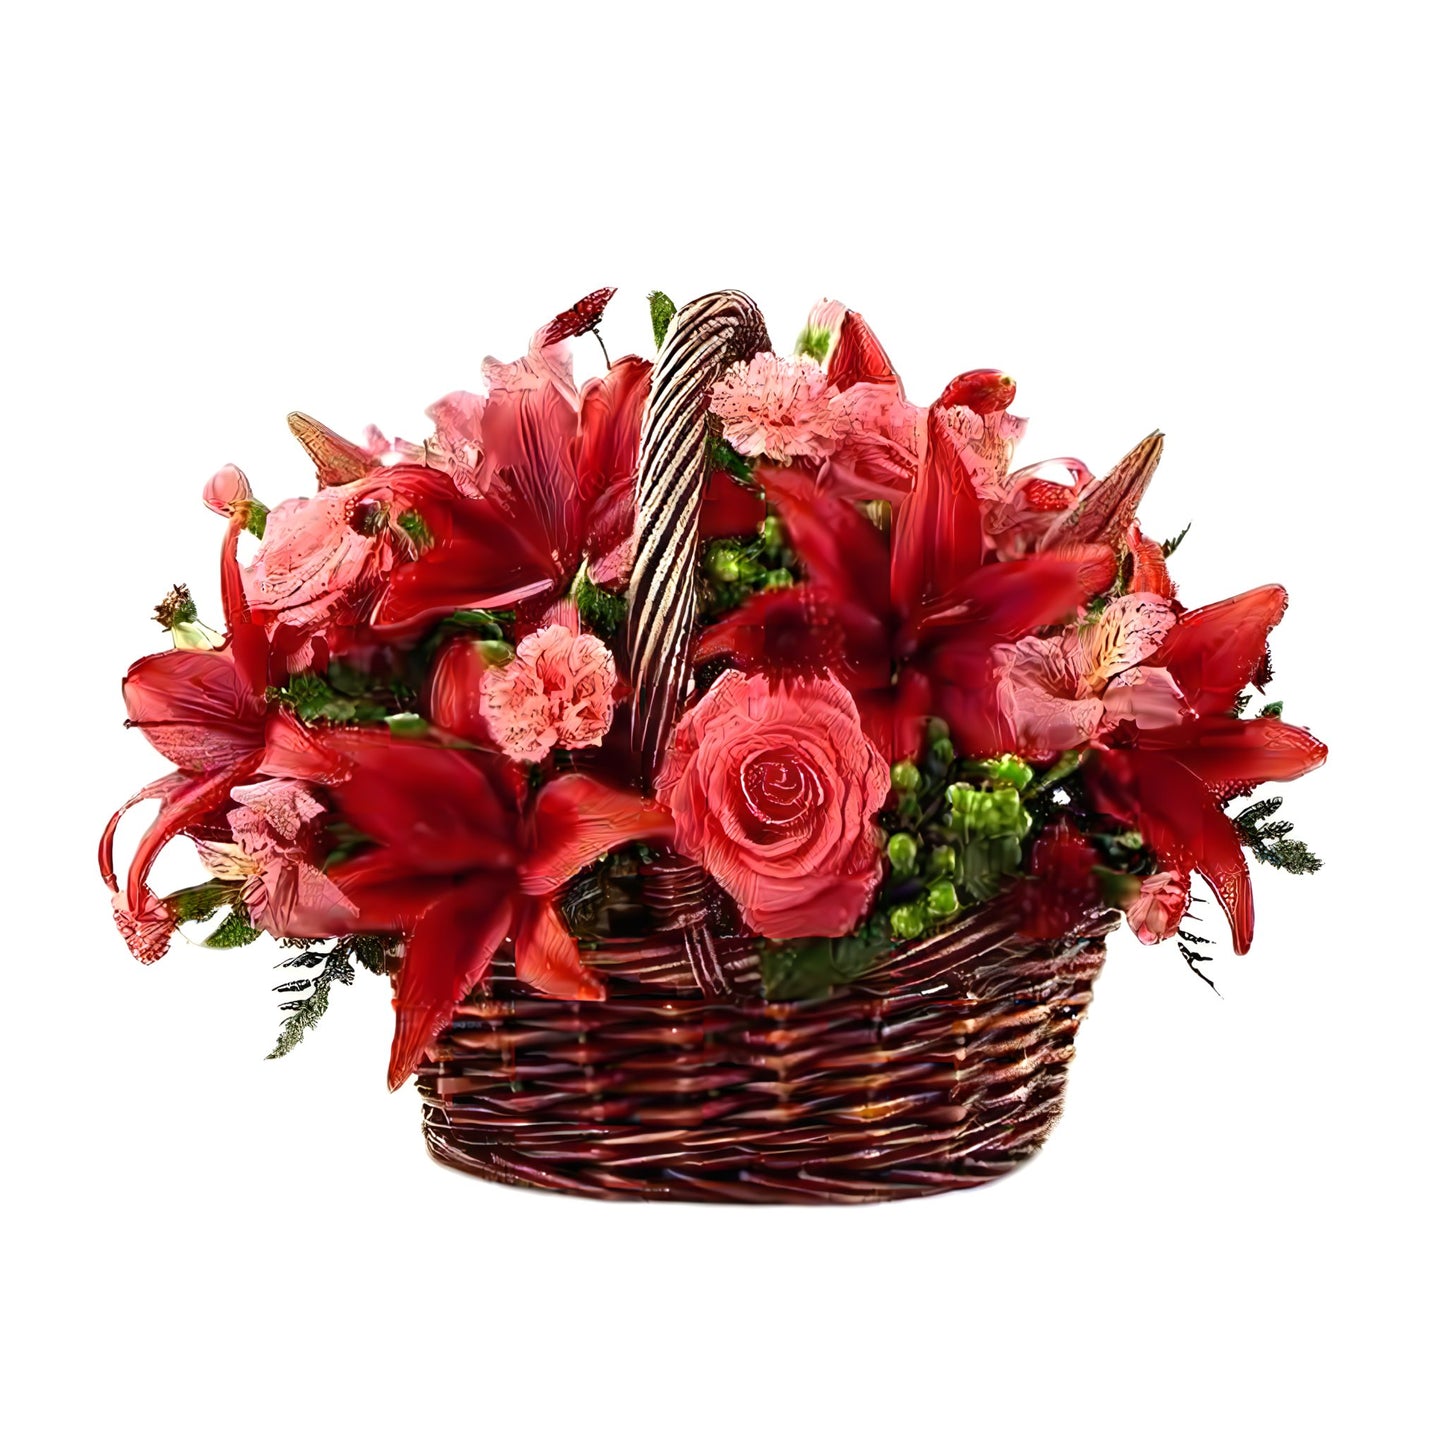 The Bountiful Garden Bouquet - Floral Arrangement - Flower Delivery Brooklyn